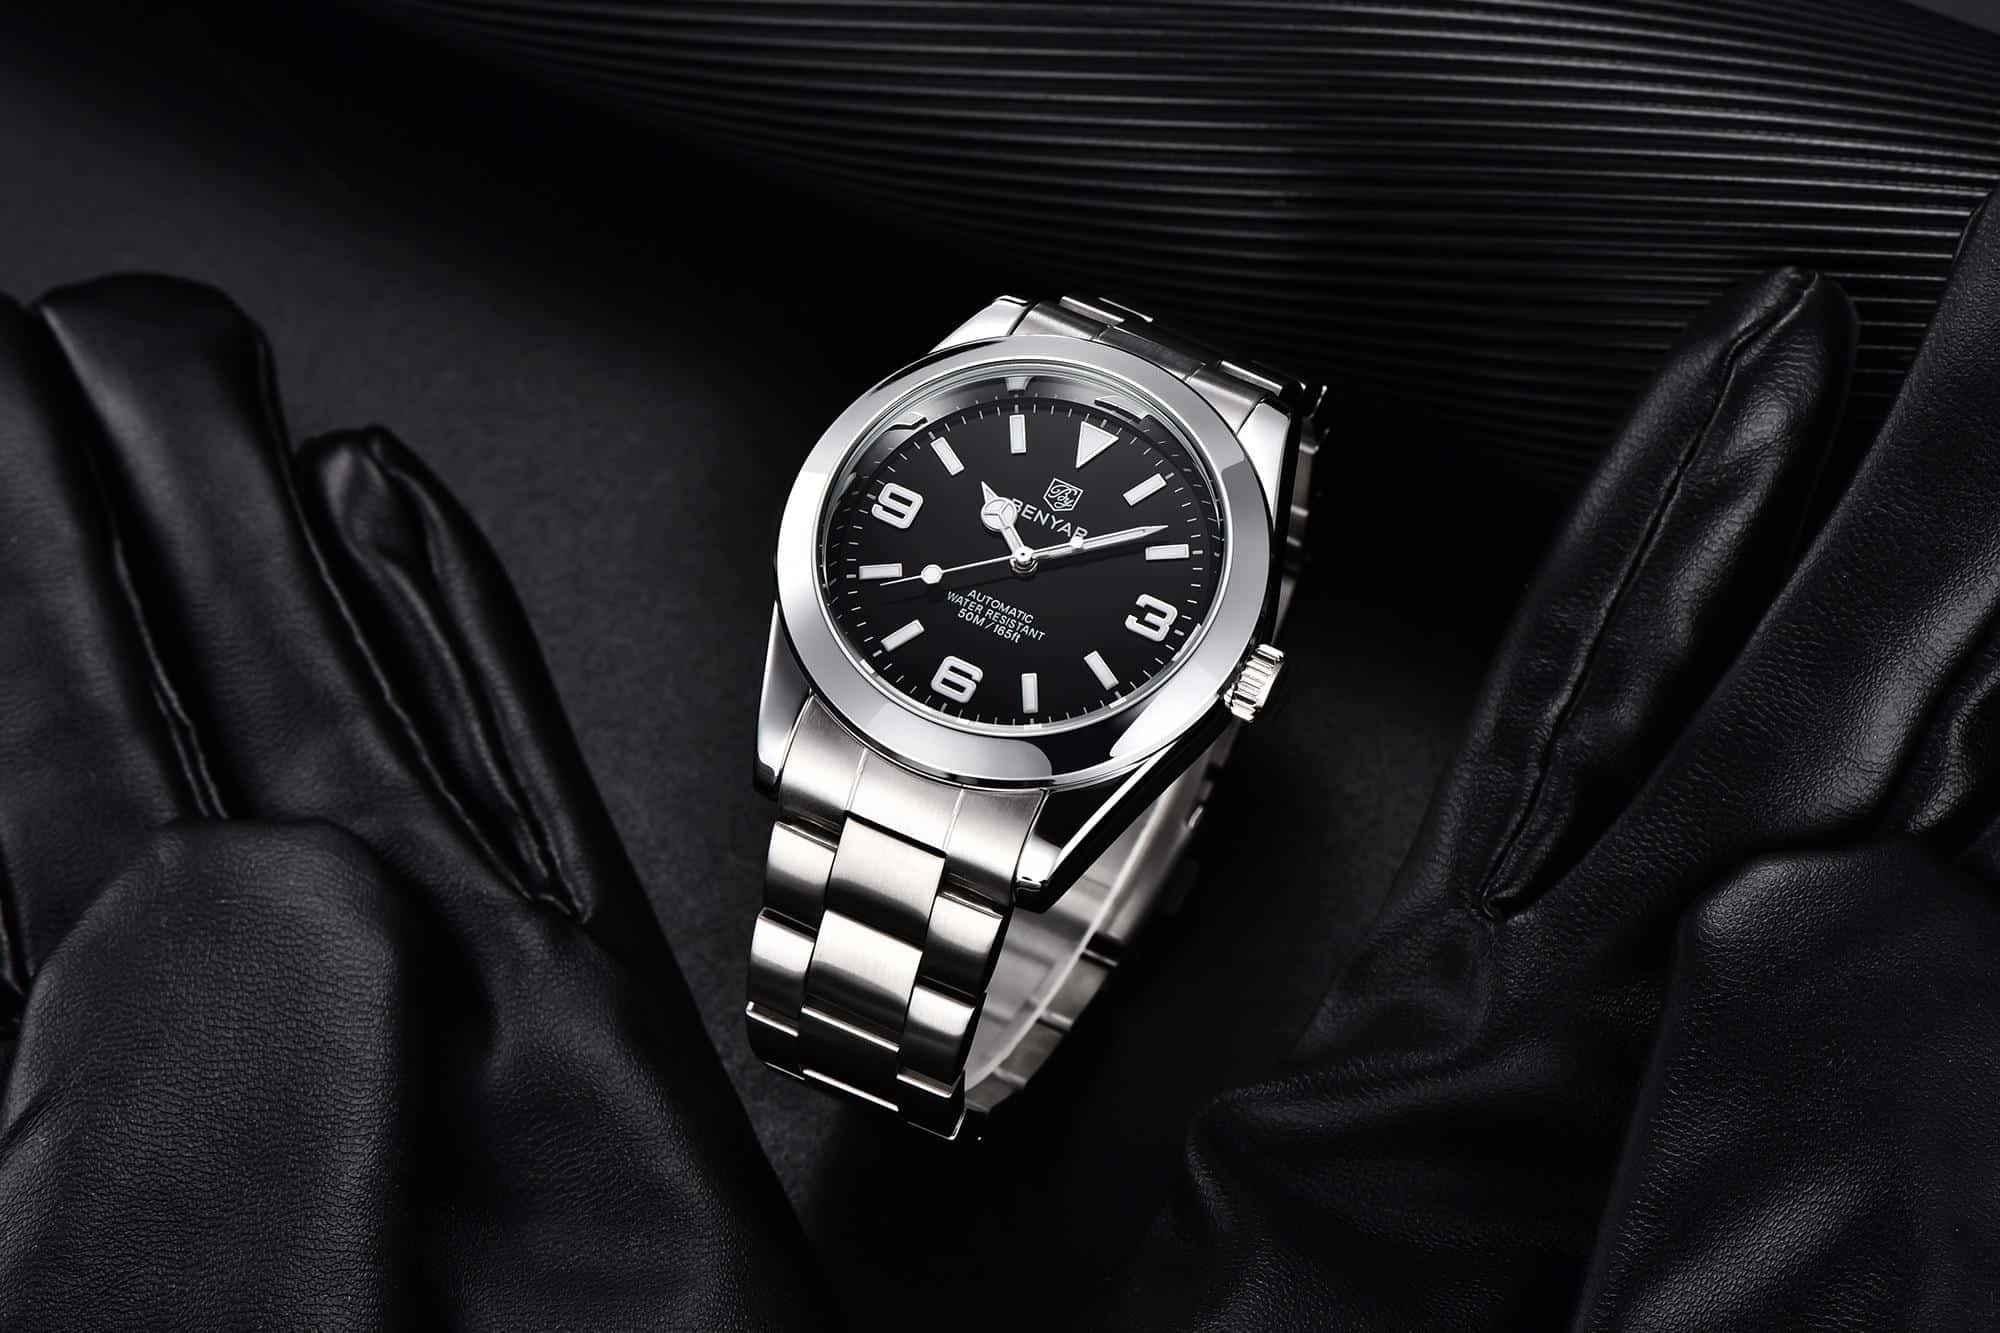 BENYAR 2021 New Men Automatic Mechanical Watch Top Brand Men's Watches Fashion Waterproof Sport Watch Mens Watches Reloj Hombre